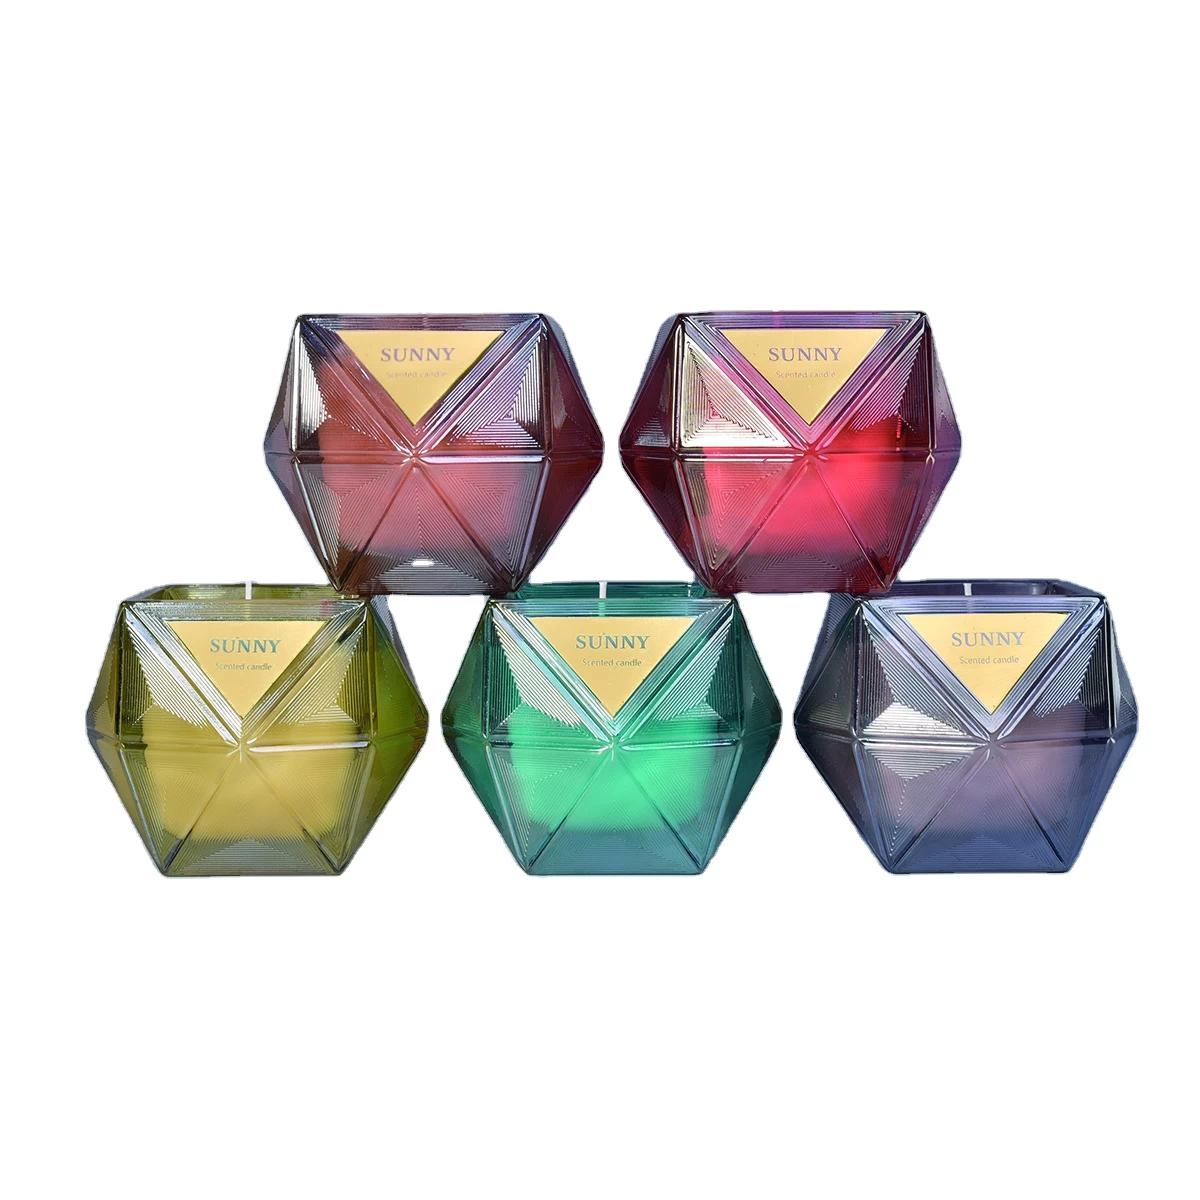 10oz 20oz Sunny new design diamond crystal candle glass jar holder